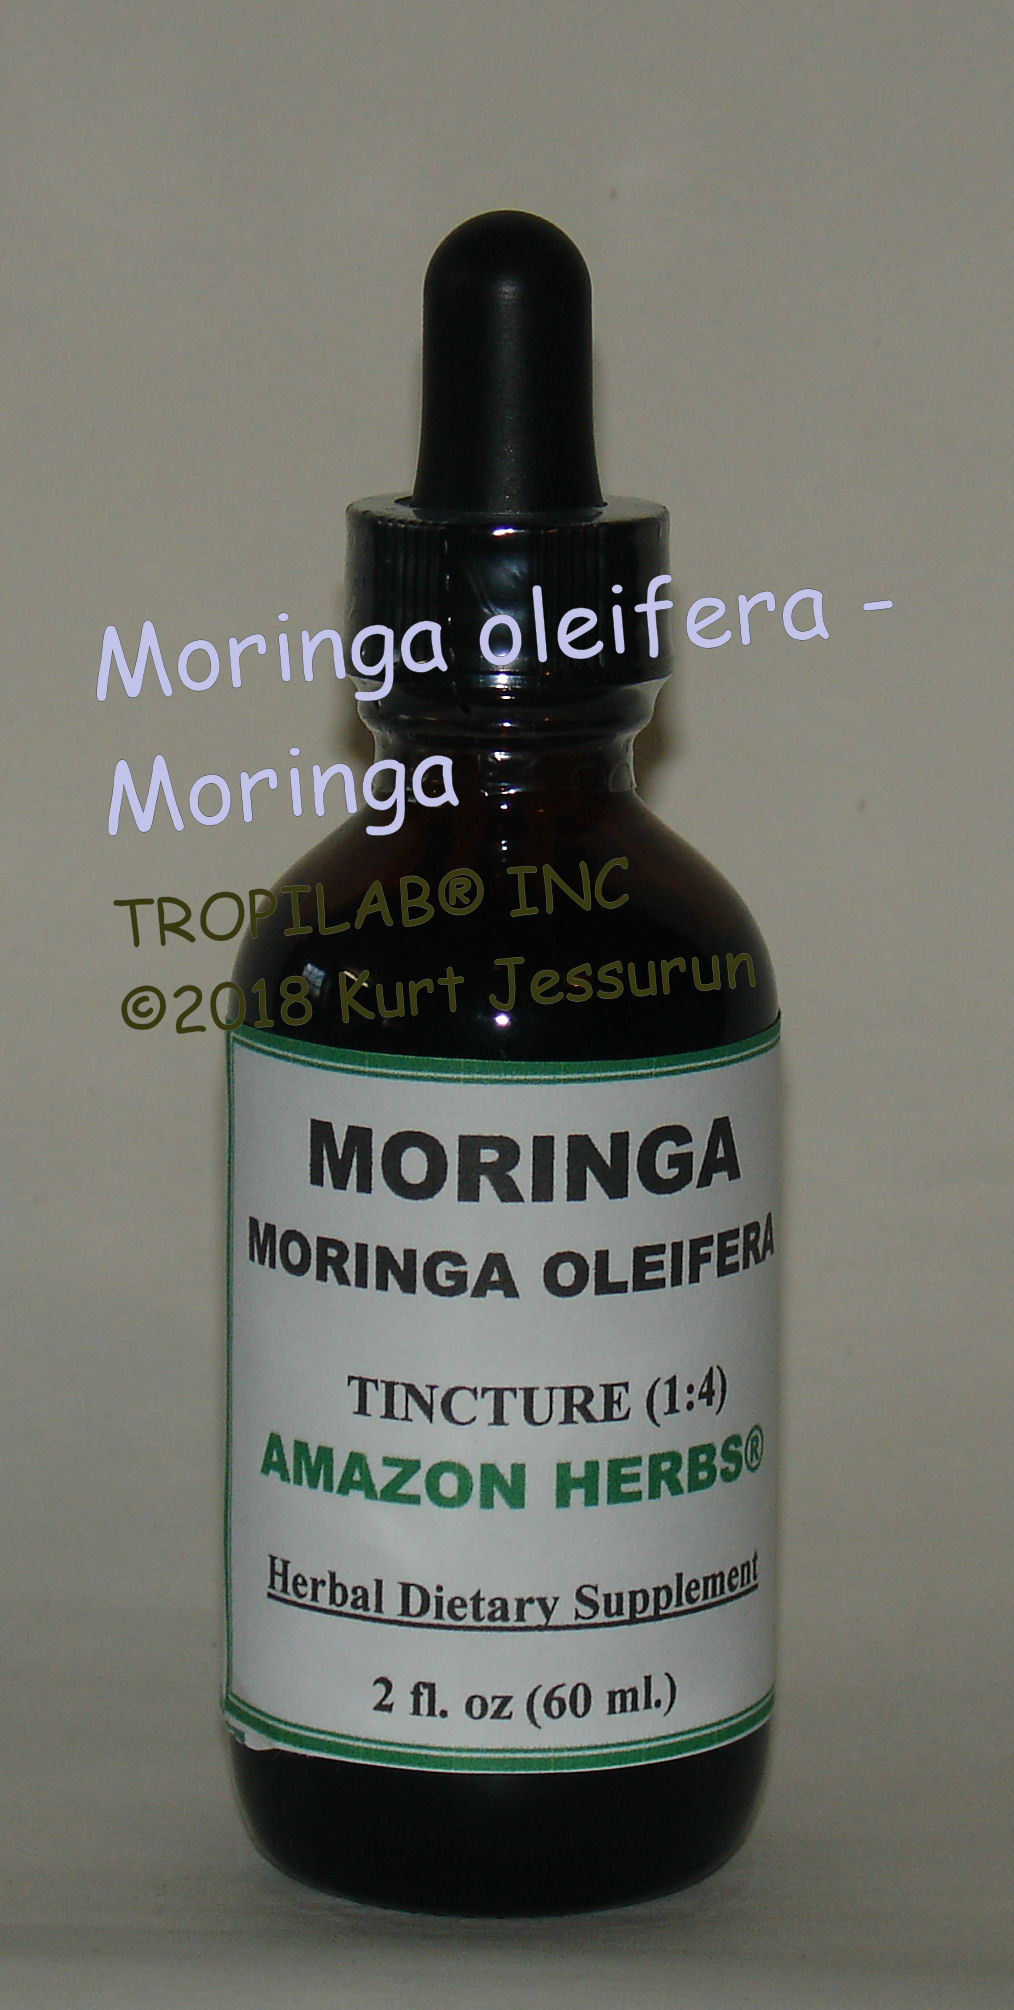 Moringa oleifera tincture - Tropilab. Has many medicinal applications such as 
anti-inflammatory, anticancer, antiviral, anticonvulsant, antileishmanial and antispasmodic